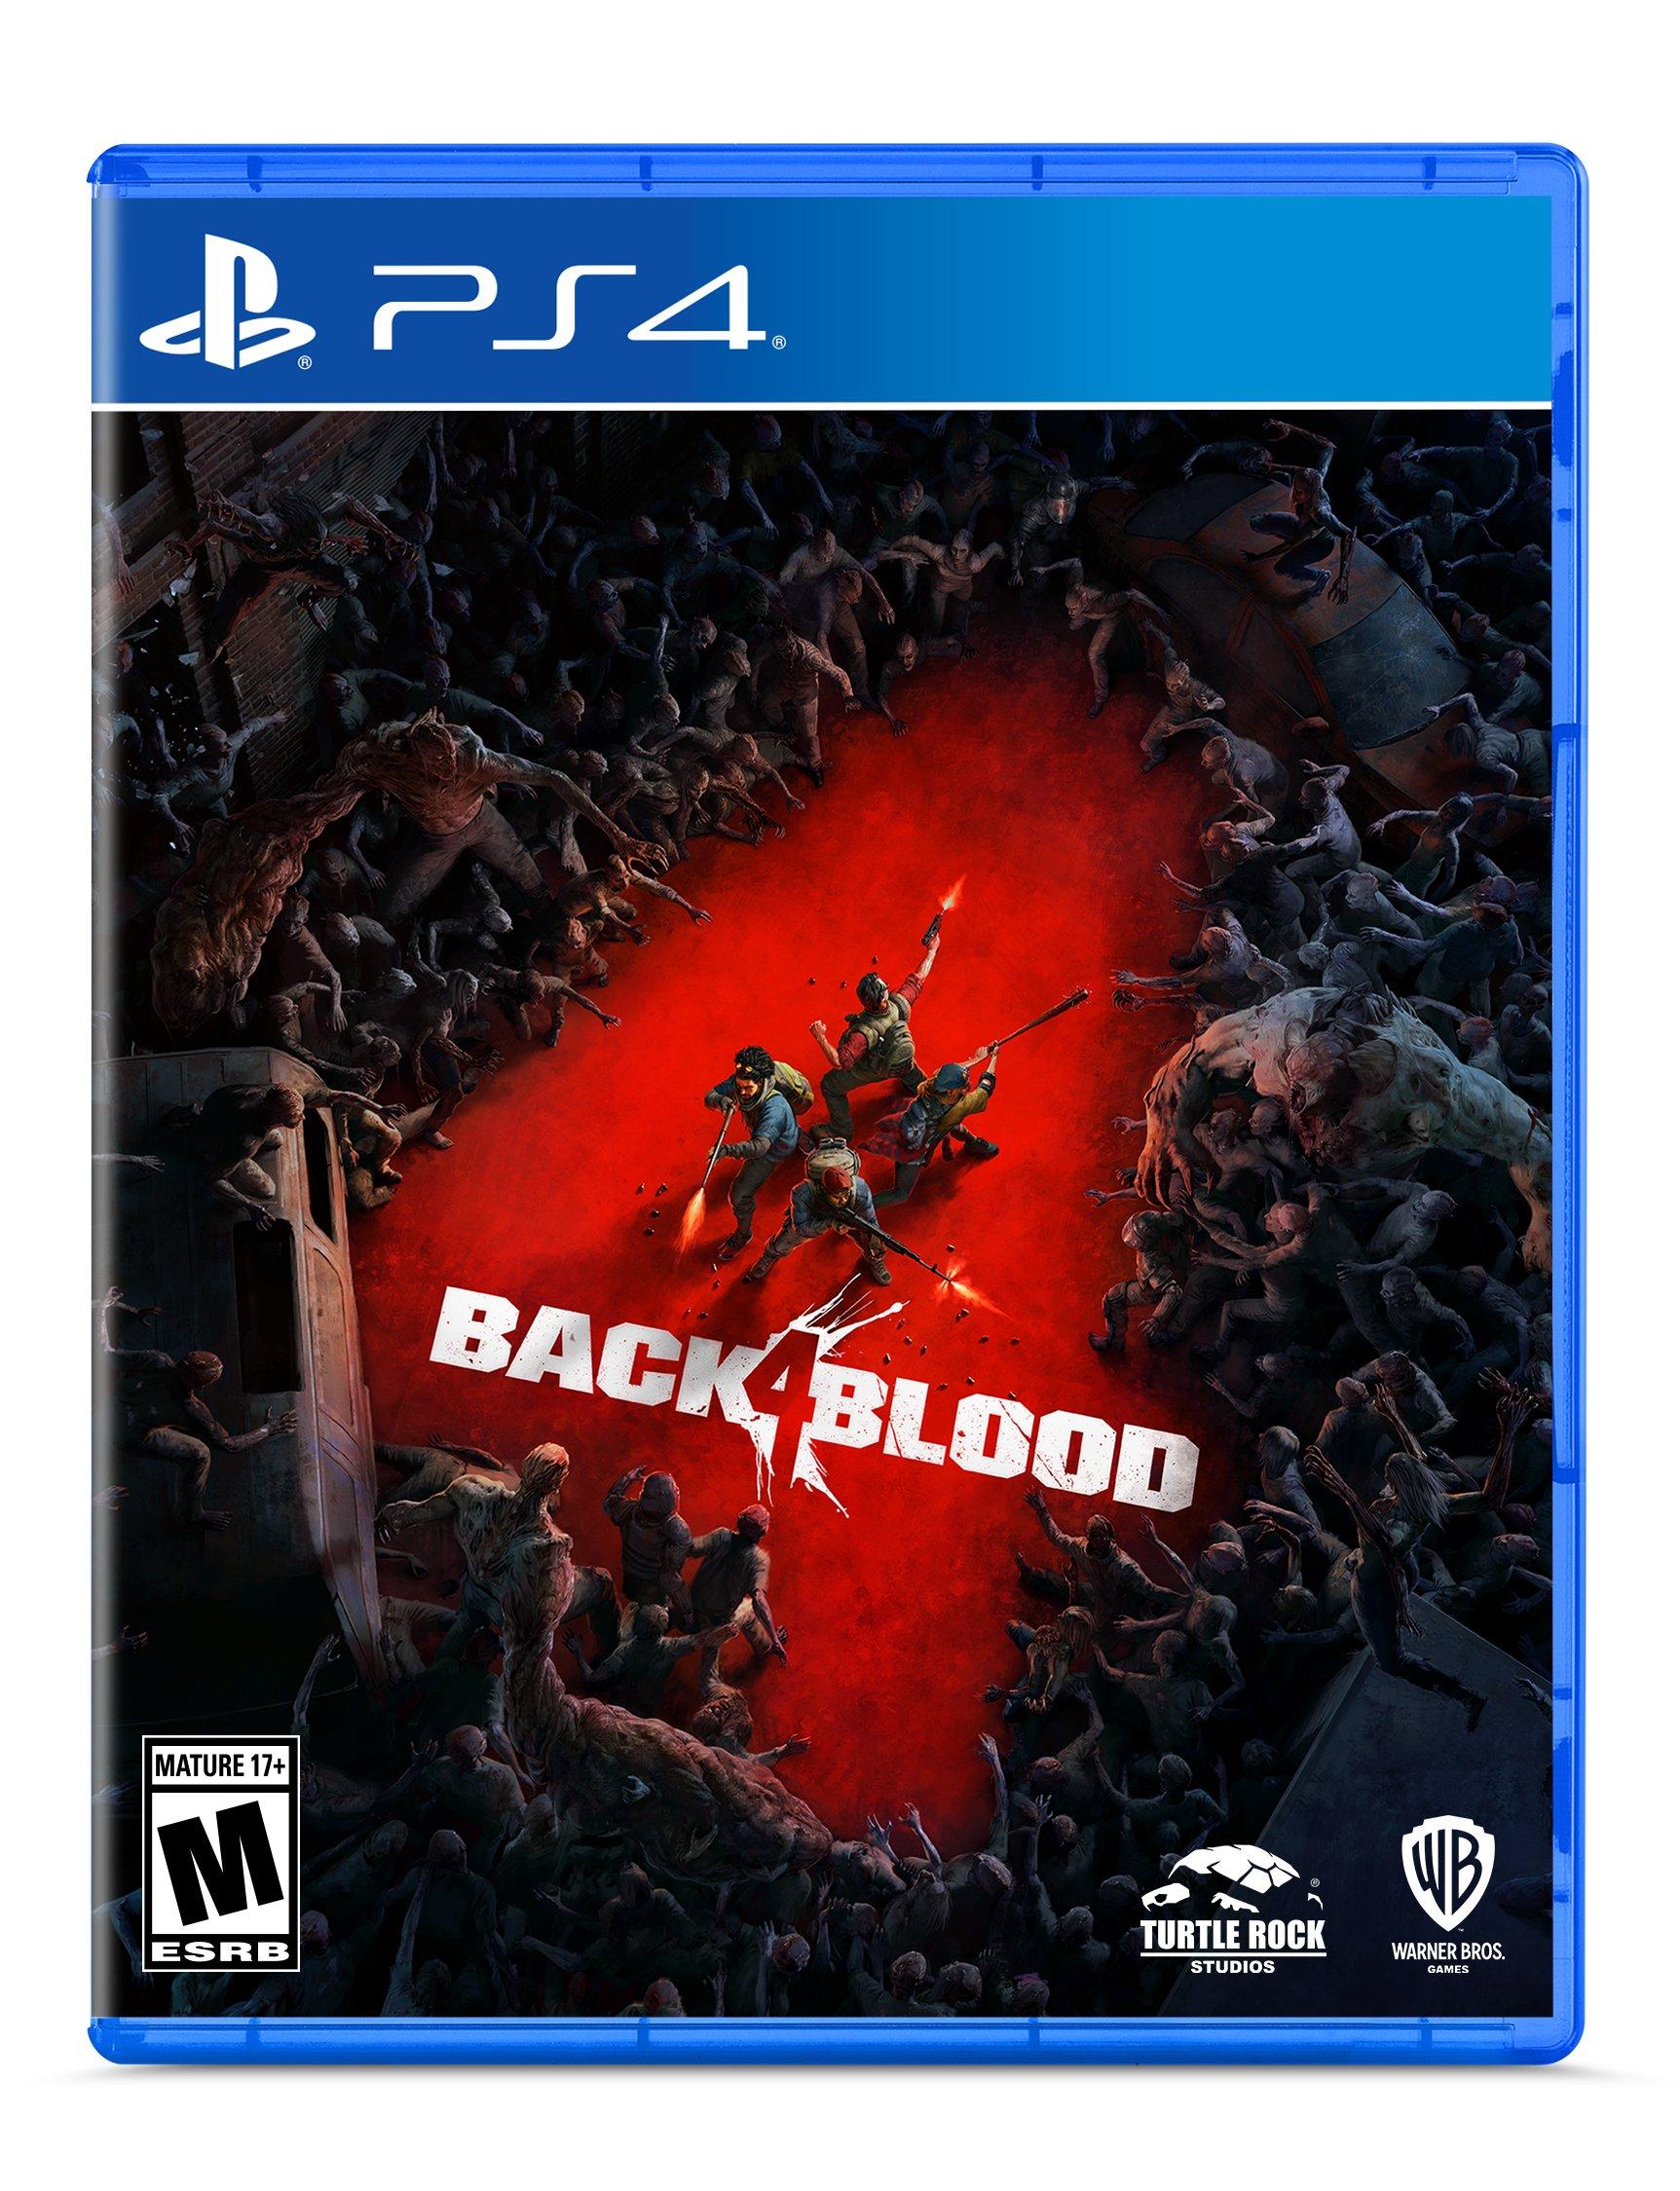 Does Back 4 Blood have splitscreen co-op mode?